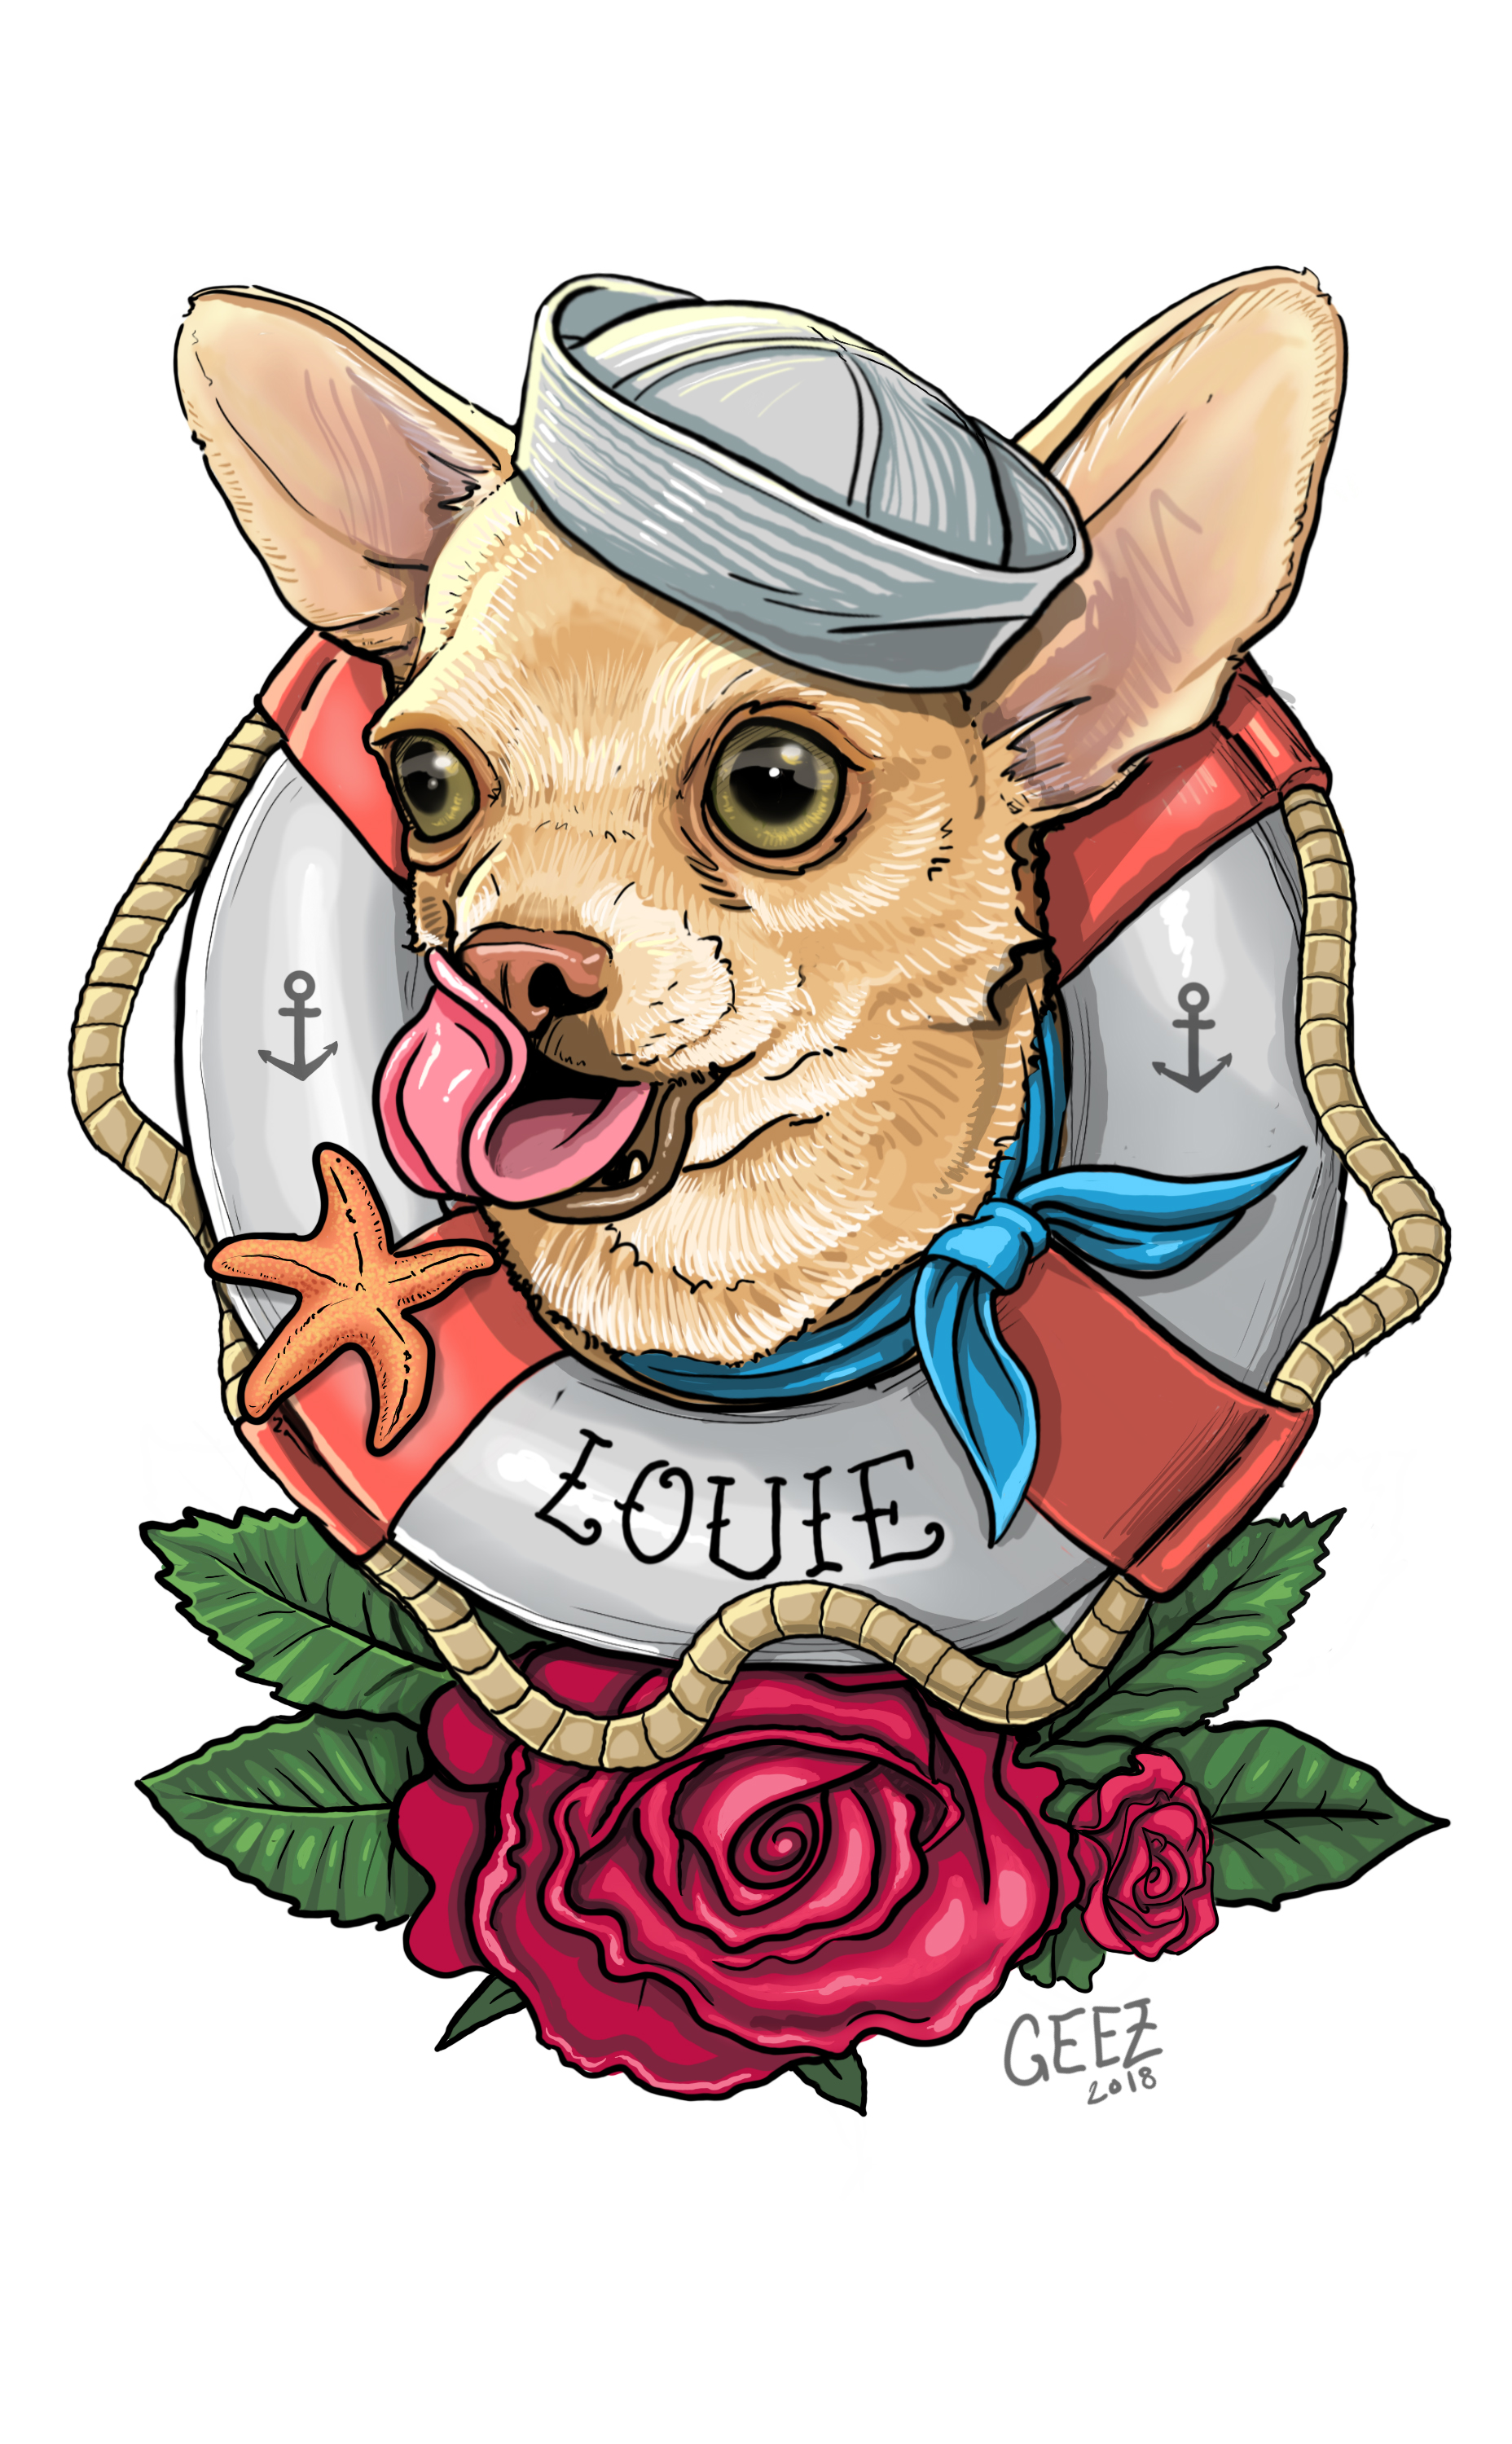 Sailor Louie